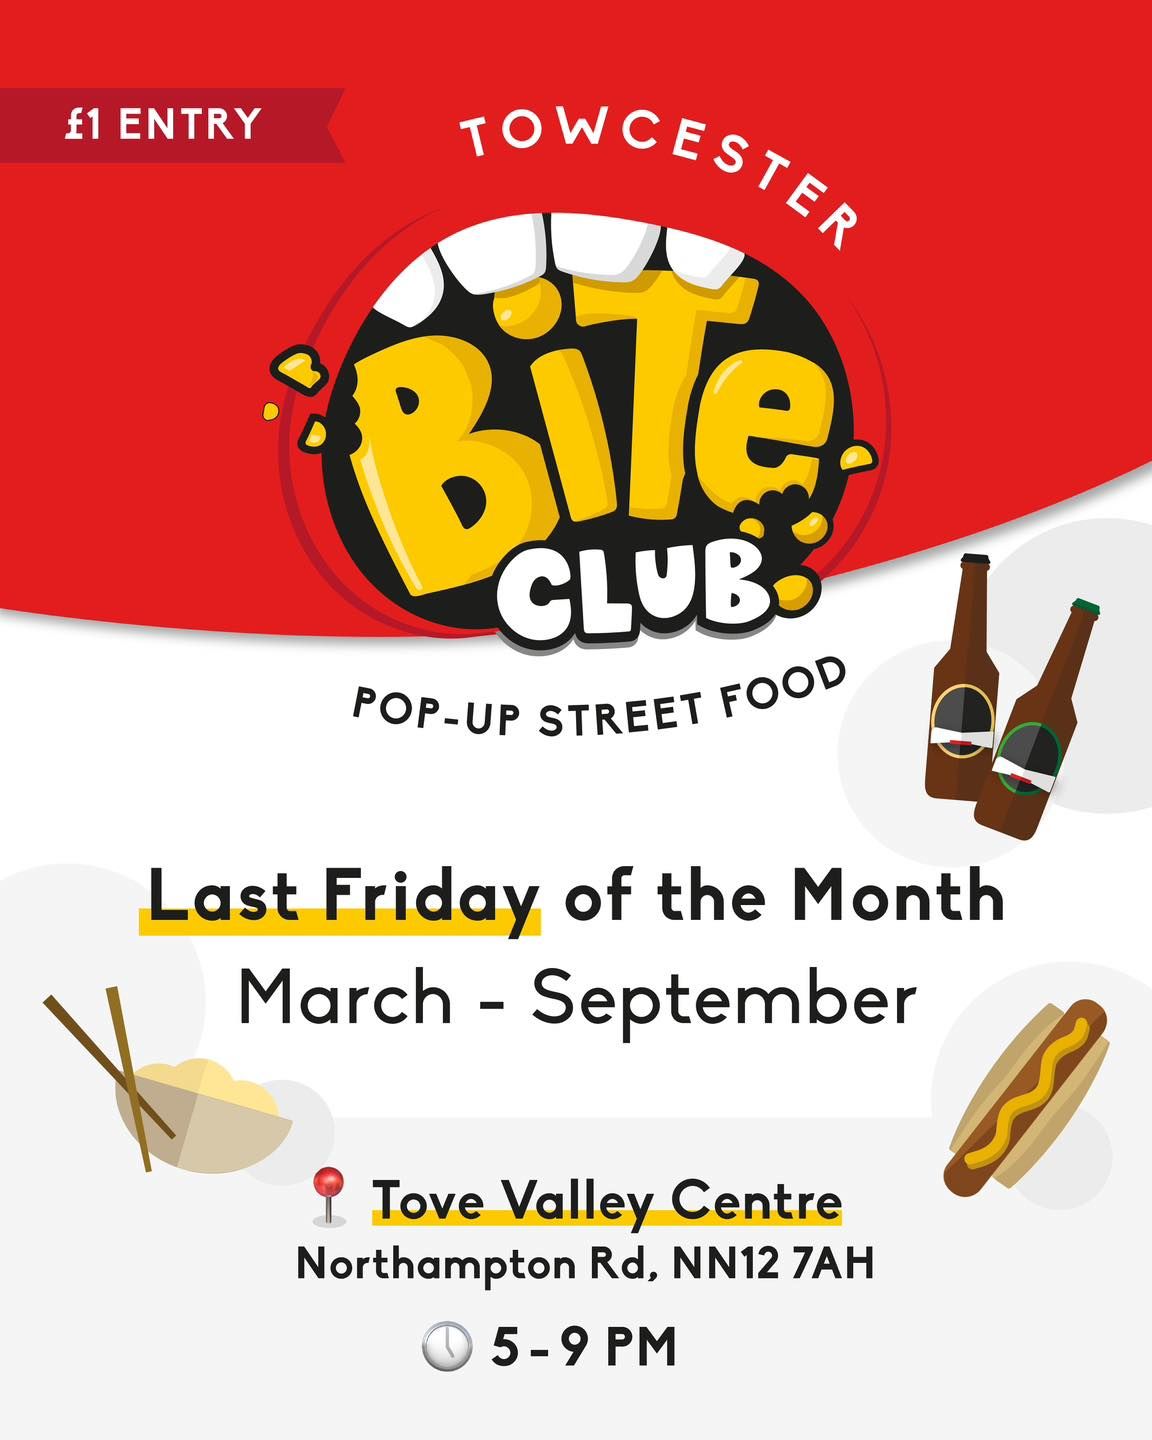 Towcester Bite Club - 26th July